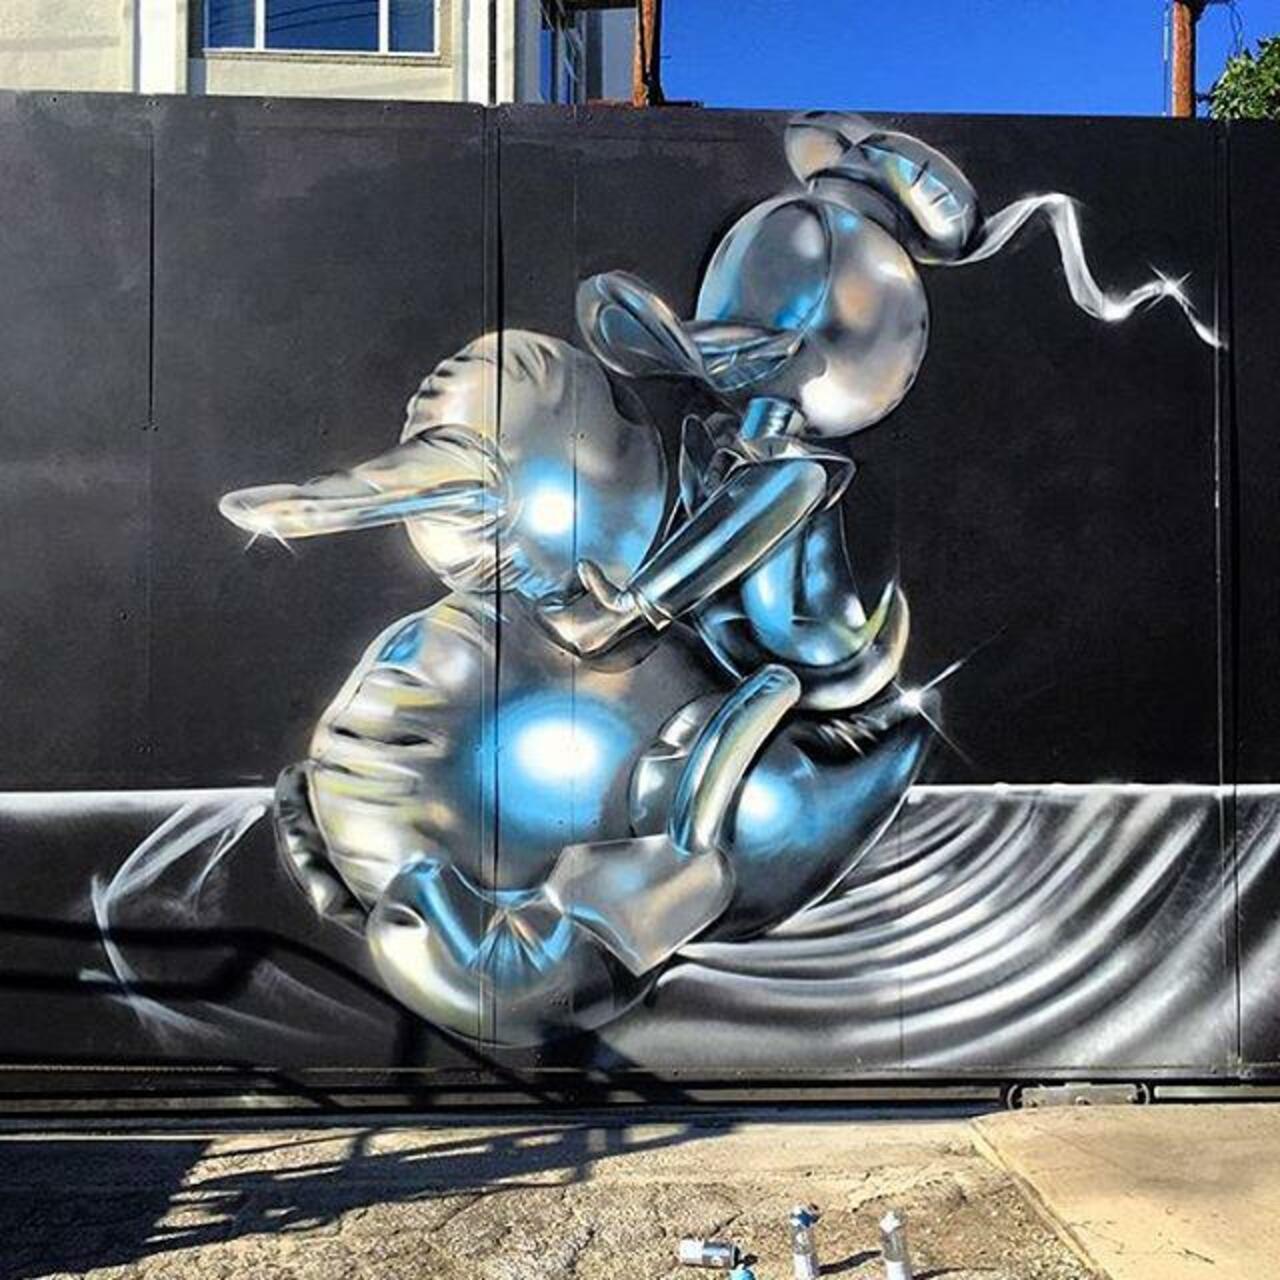 Fanakapan unveils a new mural in Los Angeles, California. #StreetArt #Graffiti #Mural http://t.co/ELtu7jG43m